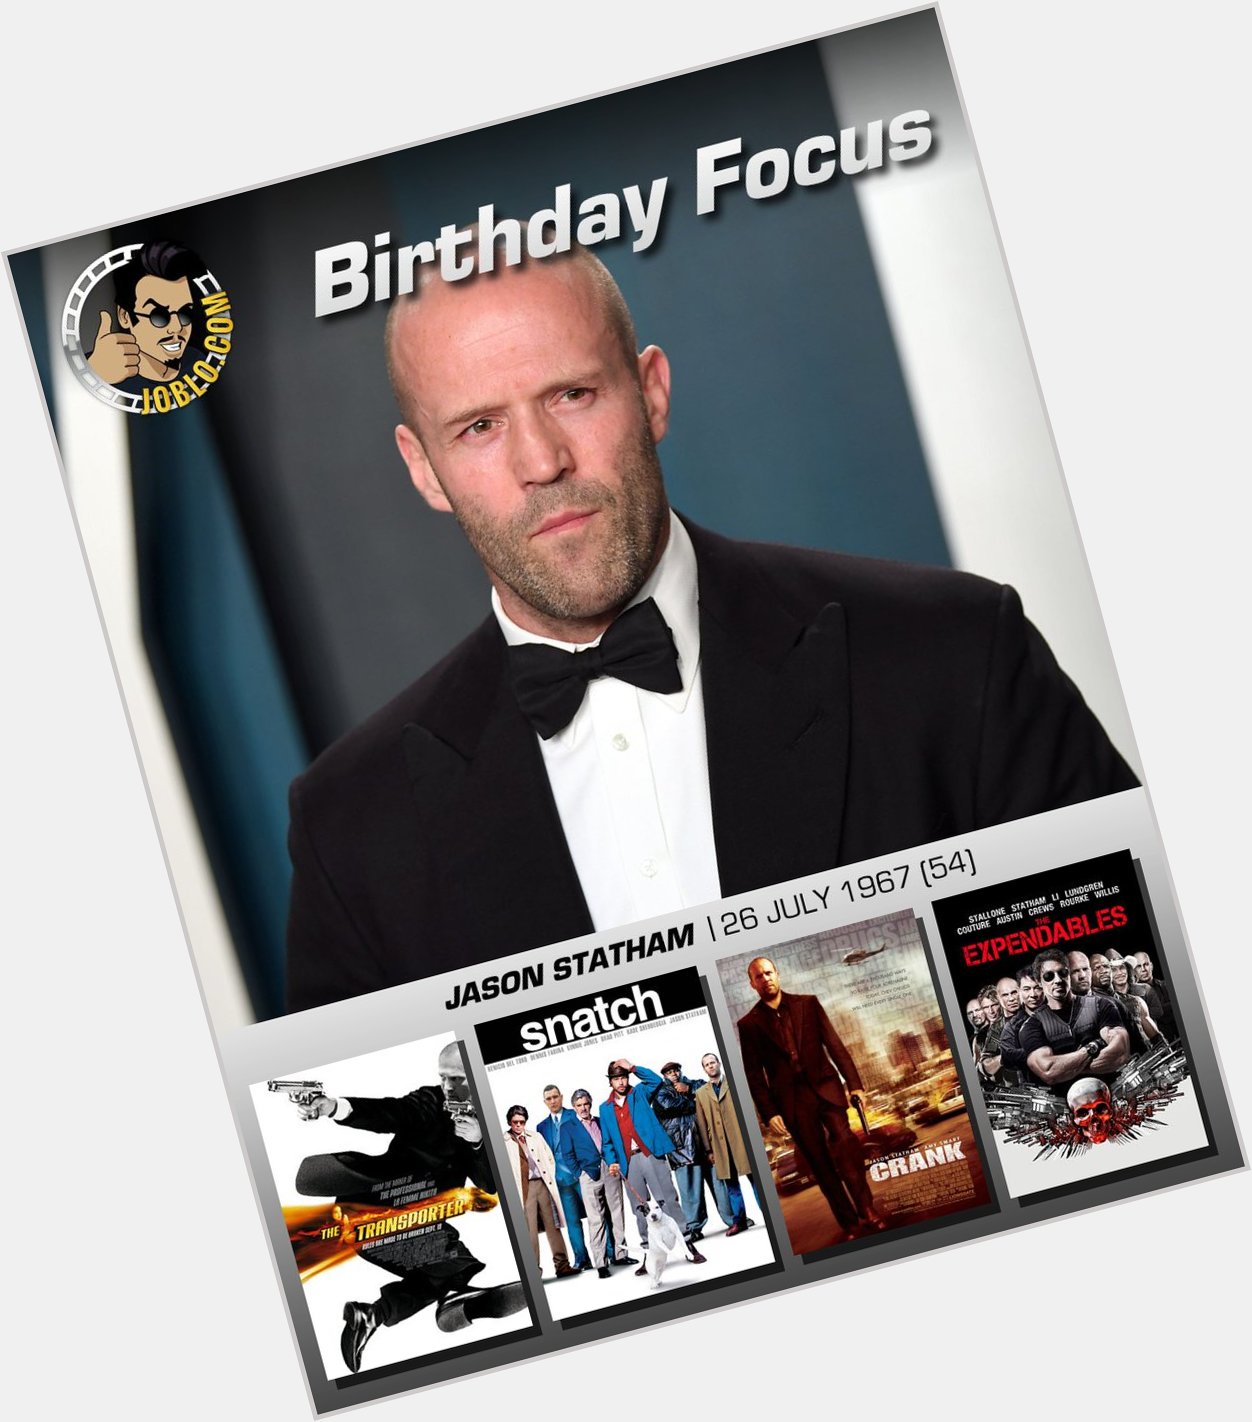 Wishing Jason Statham a very happy 54th birthday! 